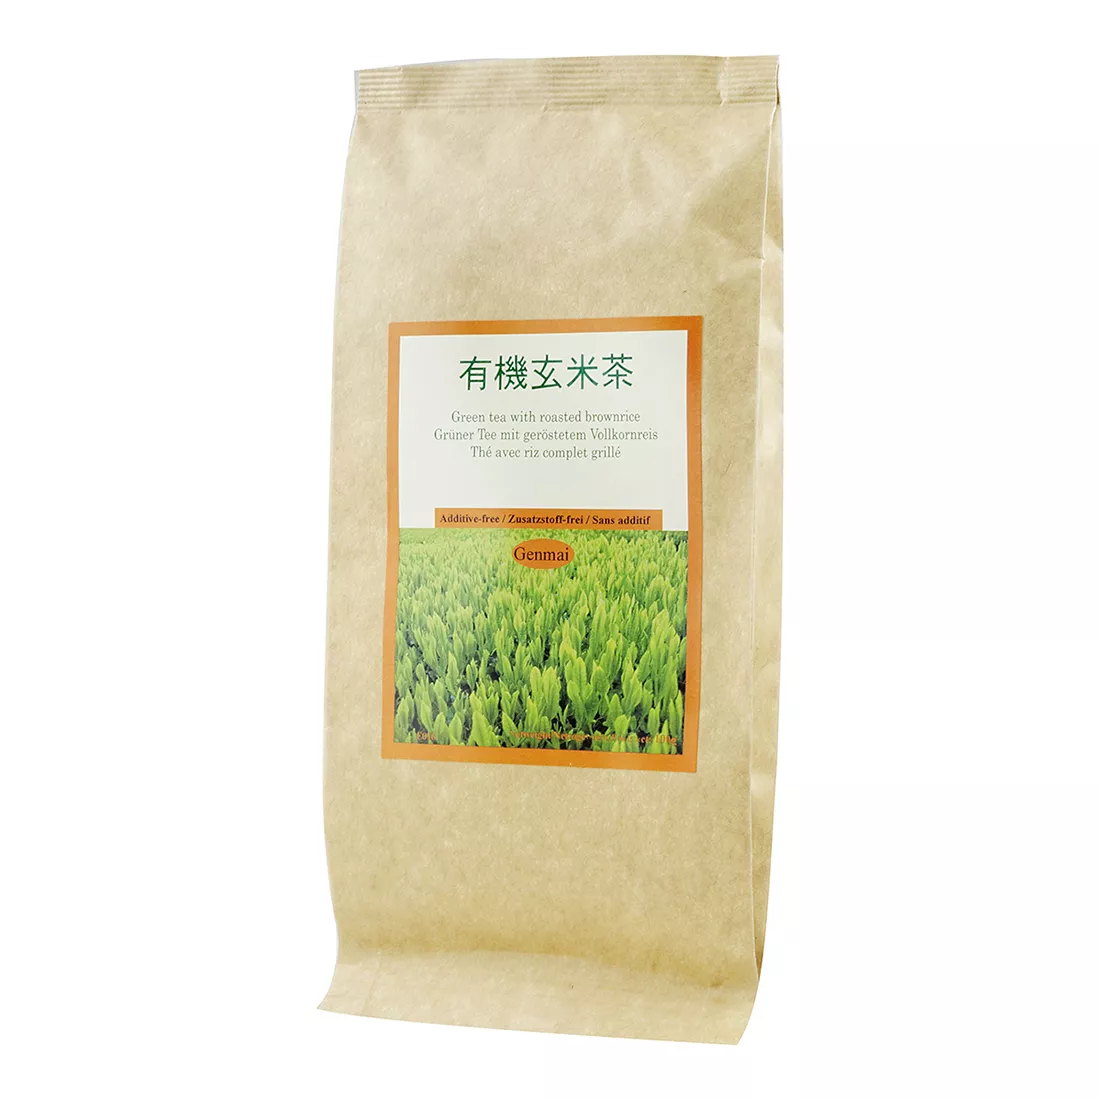 Ceai verde cu orez brun prajit (fara aditivi) Genmai SSP 100g, [],asianfood.ro